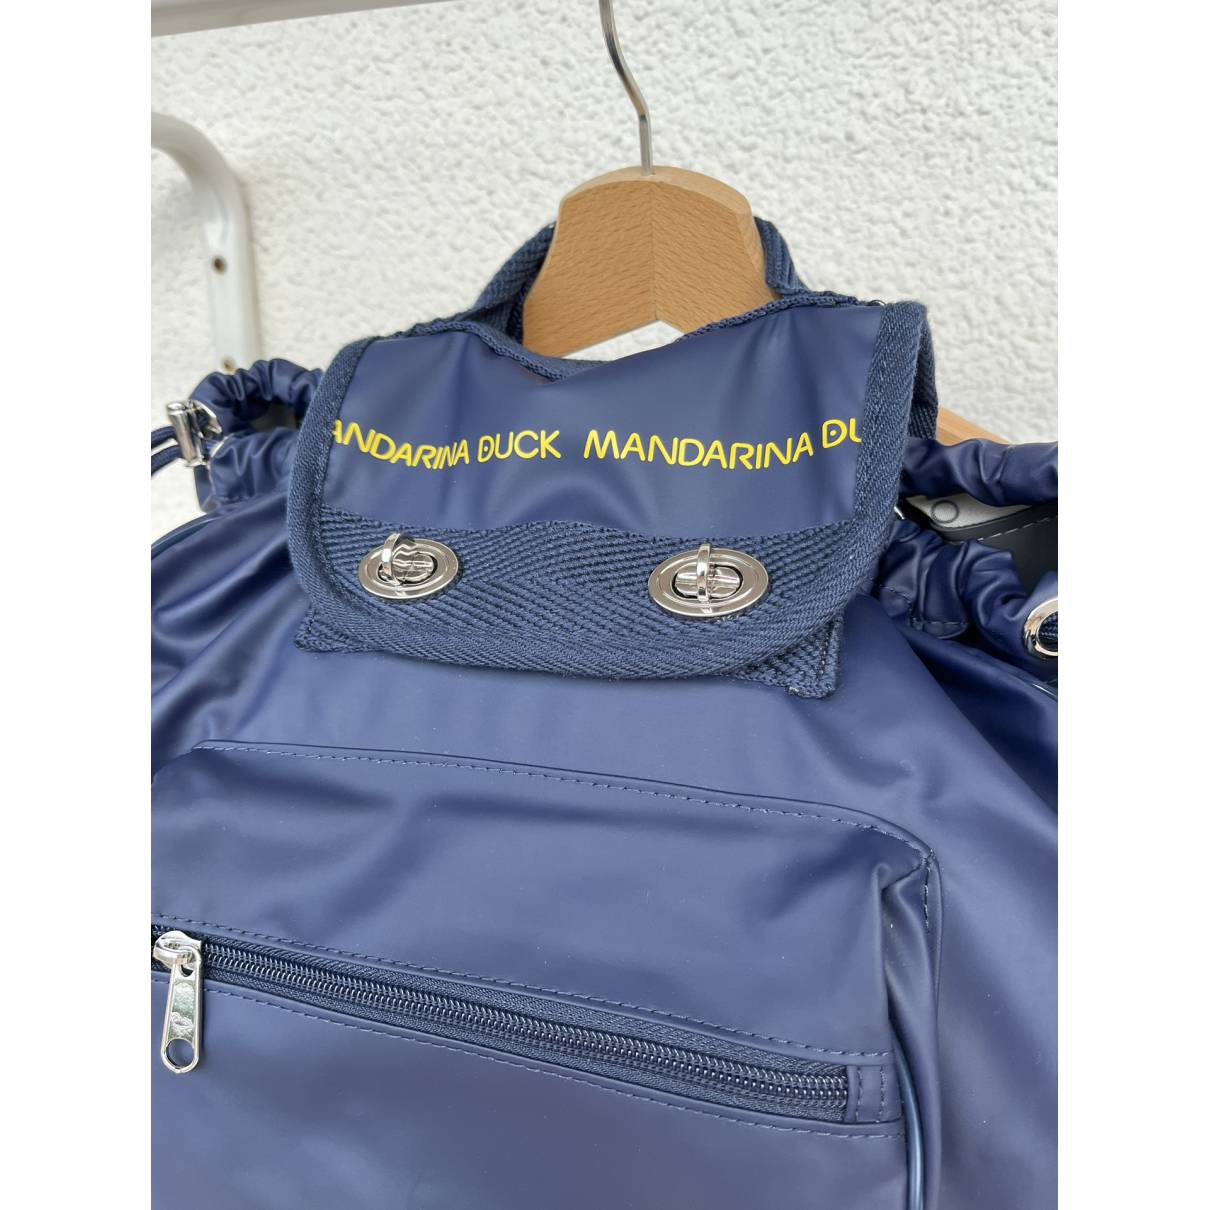 Buy MANDARINA DUCK Backpack online